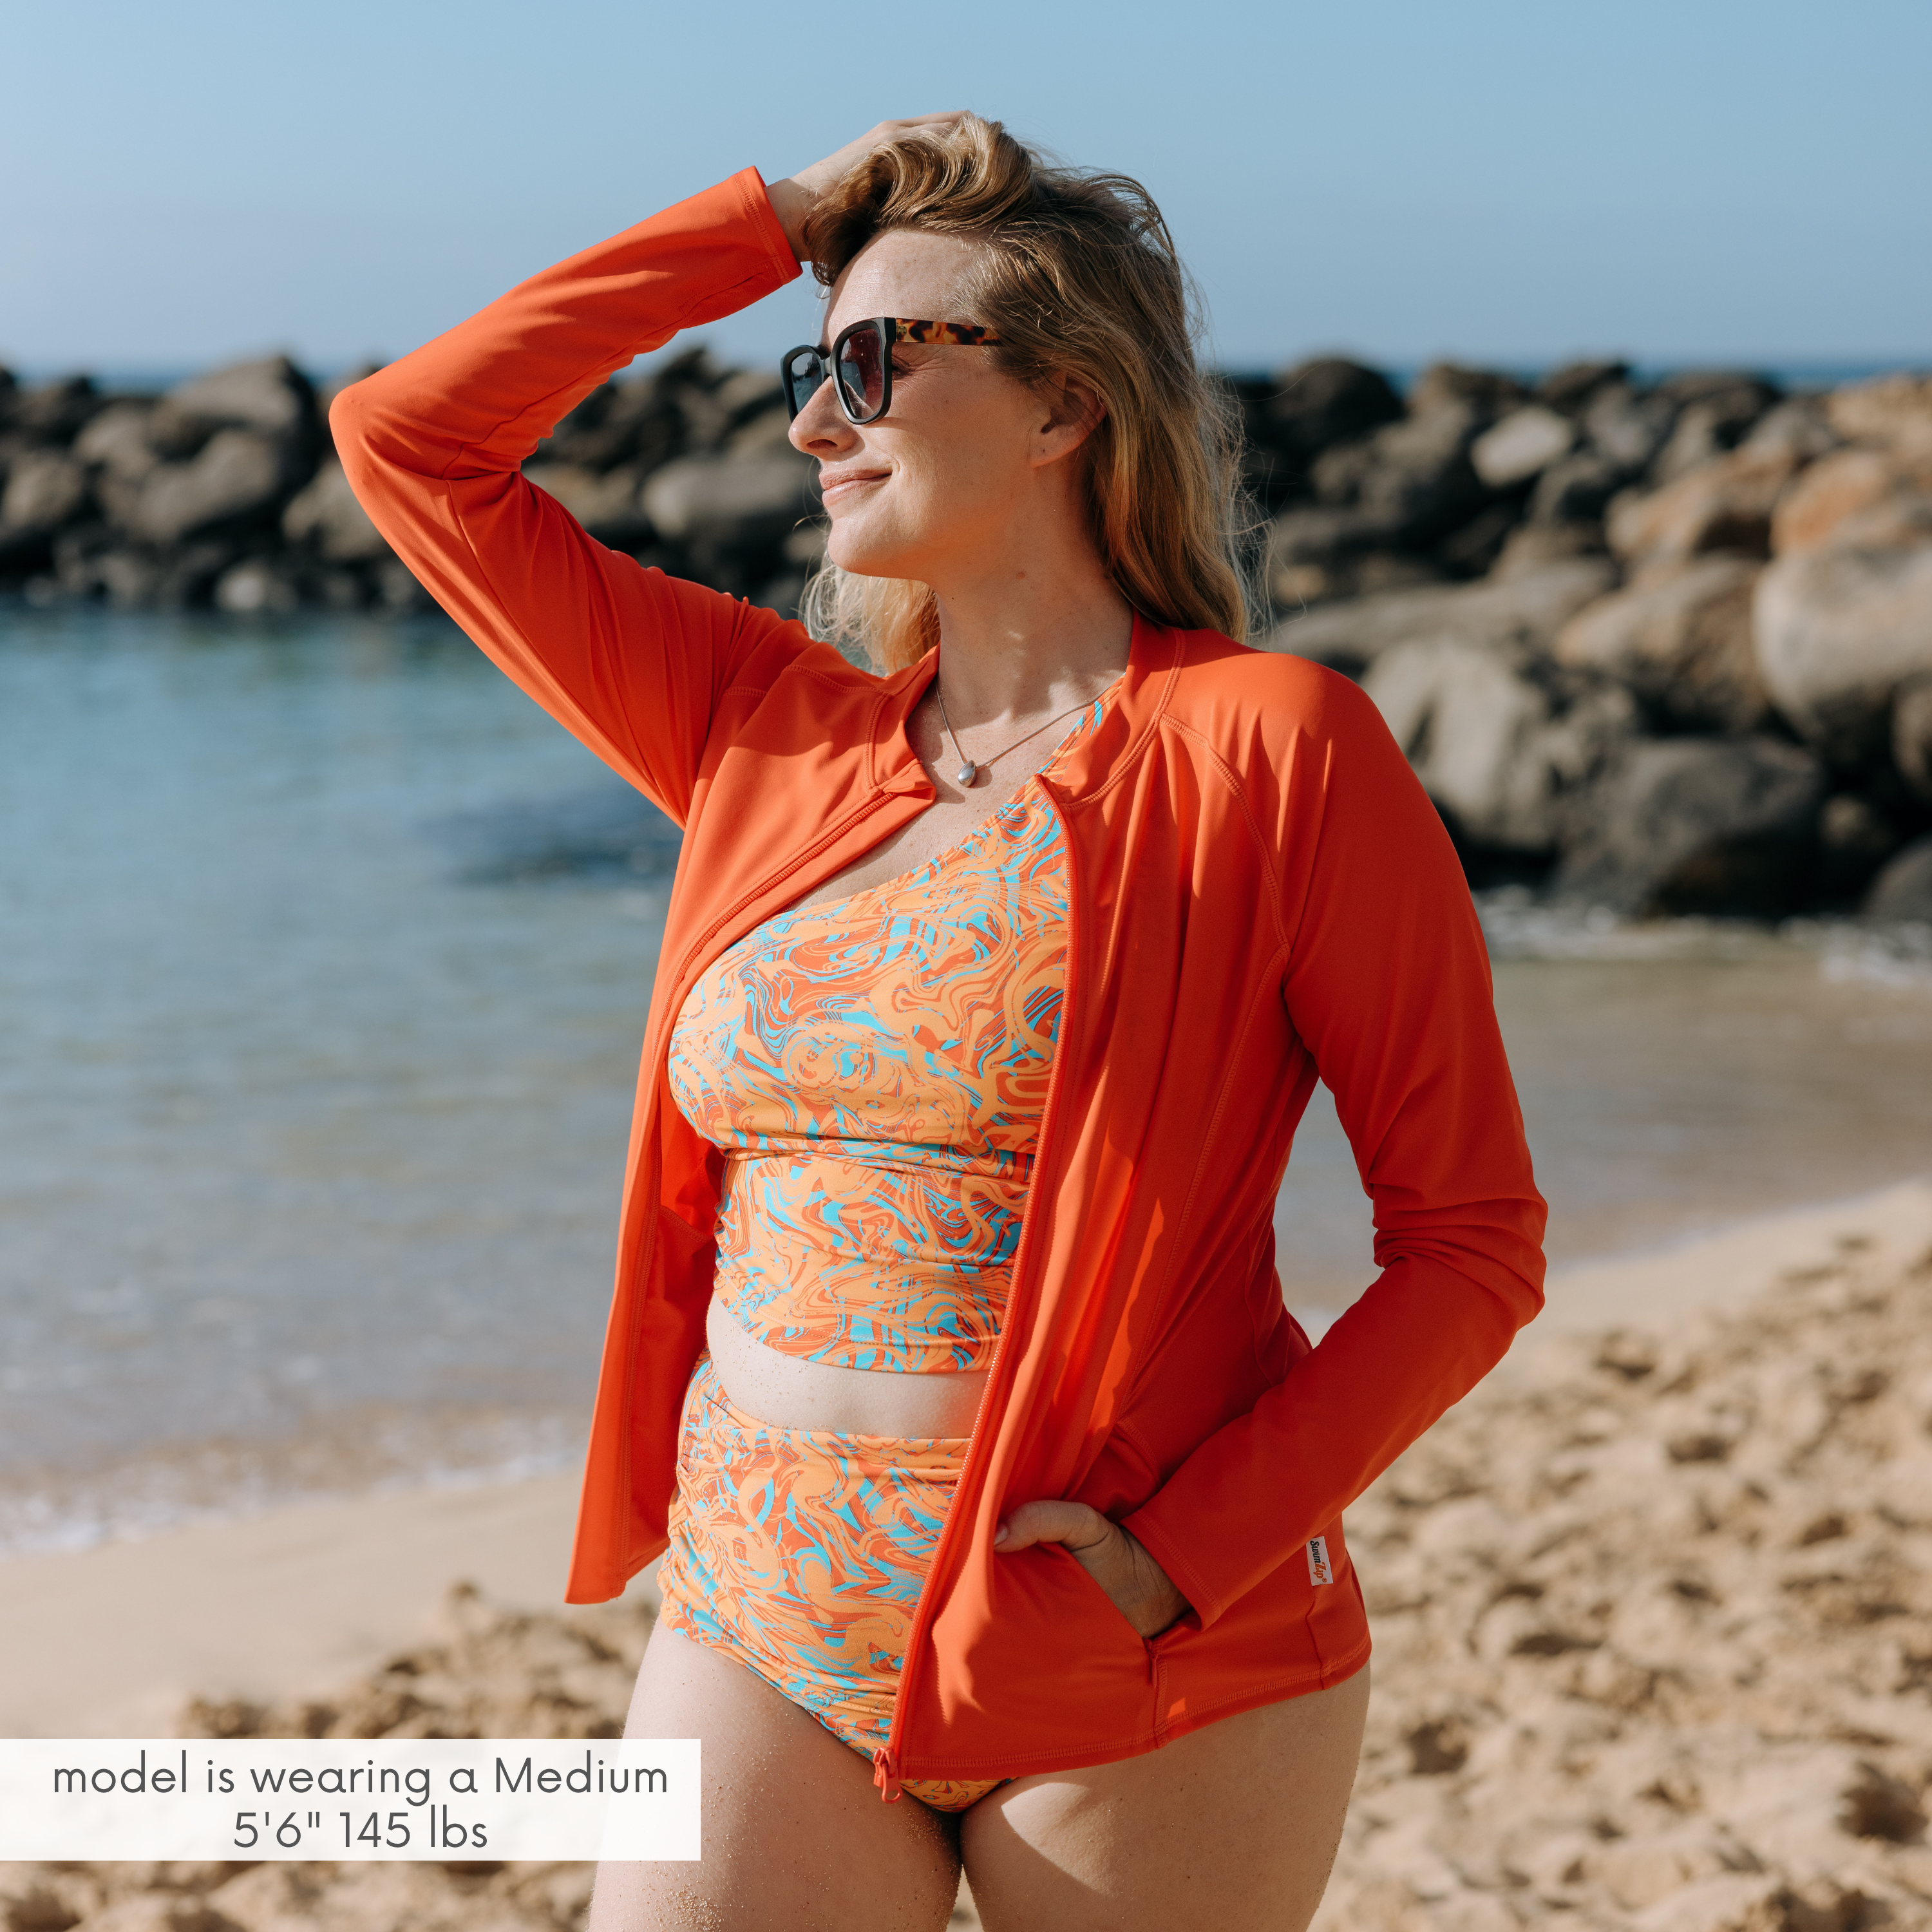 Tame the Sun Long Sleeve Swimsuit for Women, Rash Guard UV